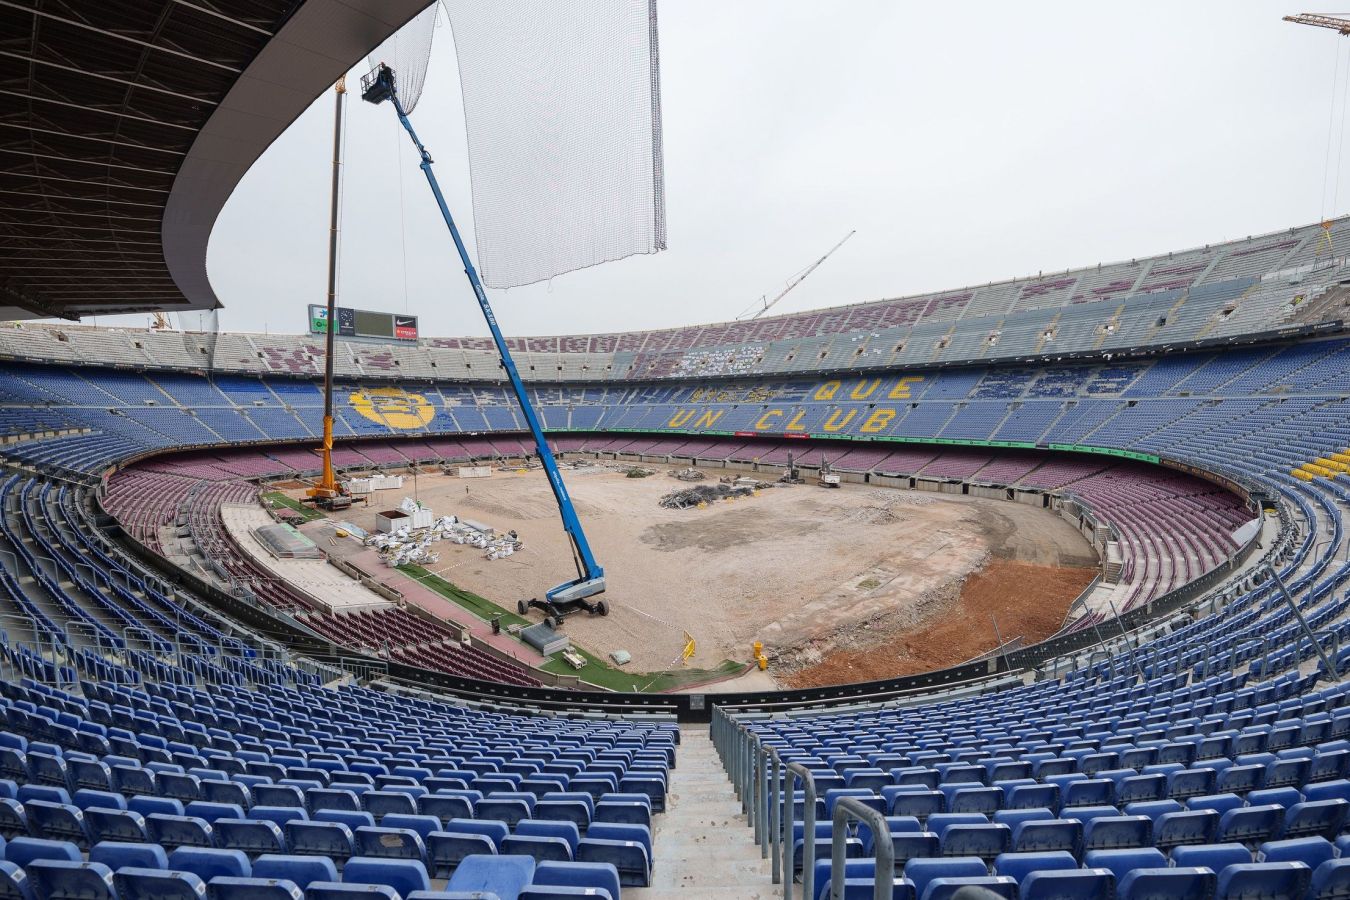 На стадионе «Spotify Камп Ноу» в Барселоне проходит реконструкция арены – фото и видео из Испании - Чемпионат